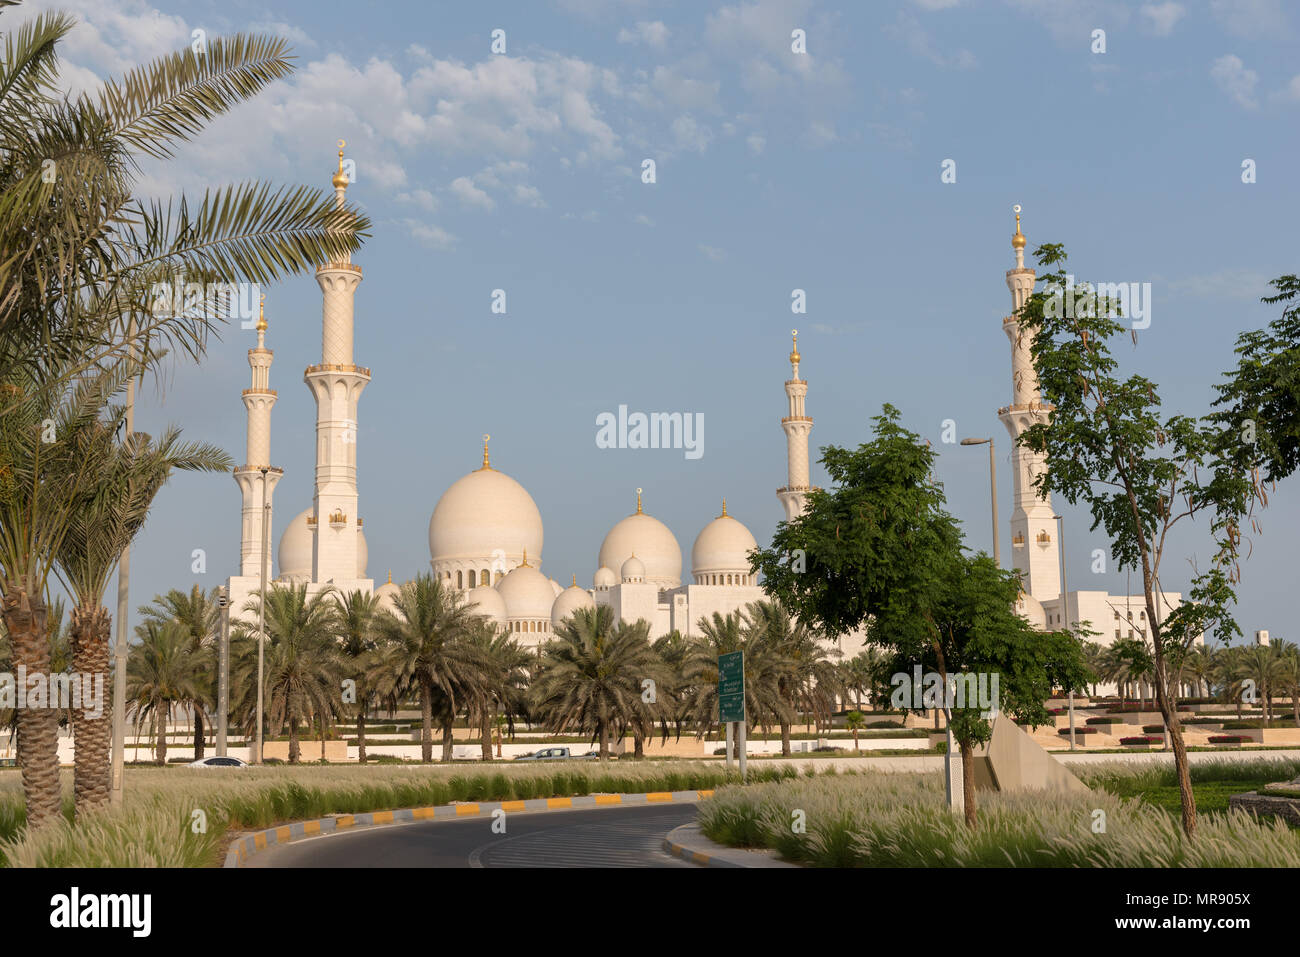 Sheikh Zayed Grand Mosque on th eisland of Abu Dhabi, UAE Stock Photo